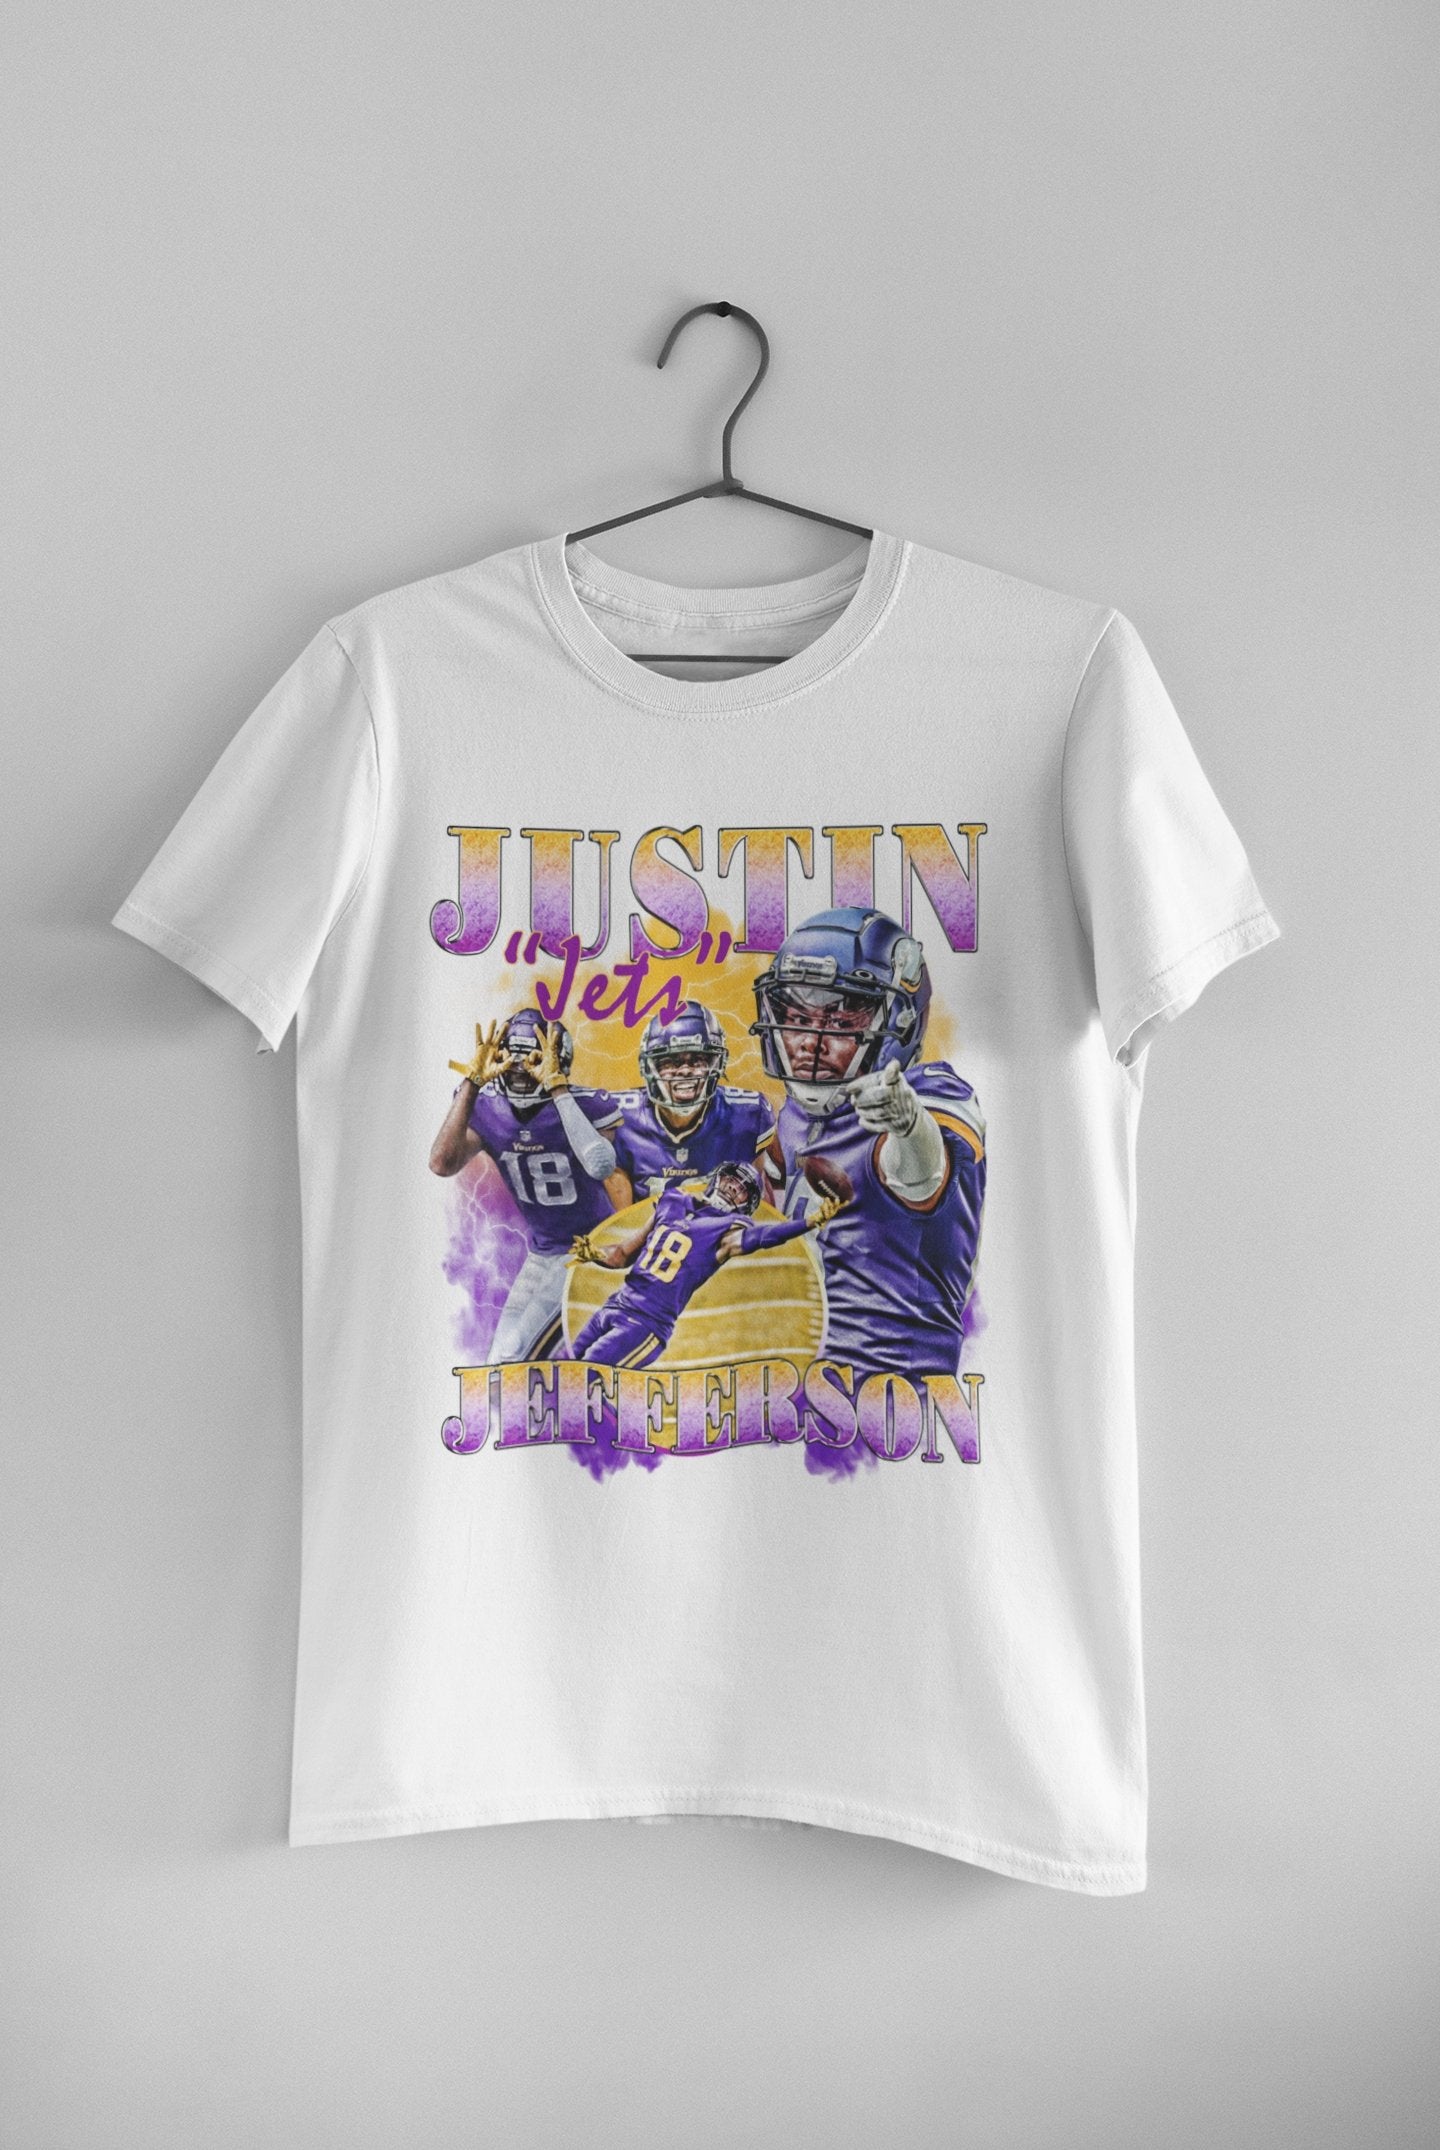 Justin Jefferson - Unisex t-shirt - Modern Vintage Apparel